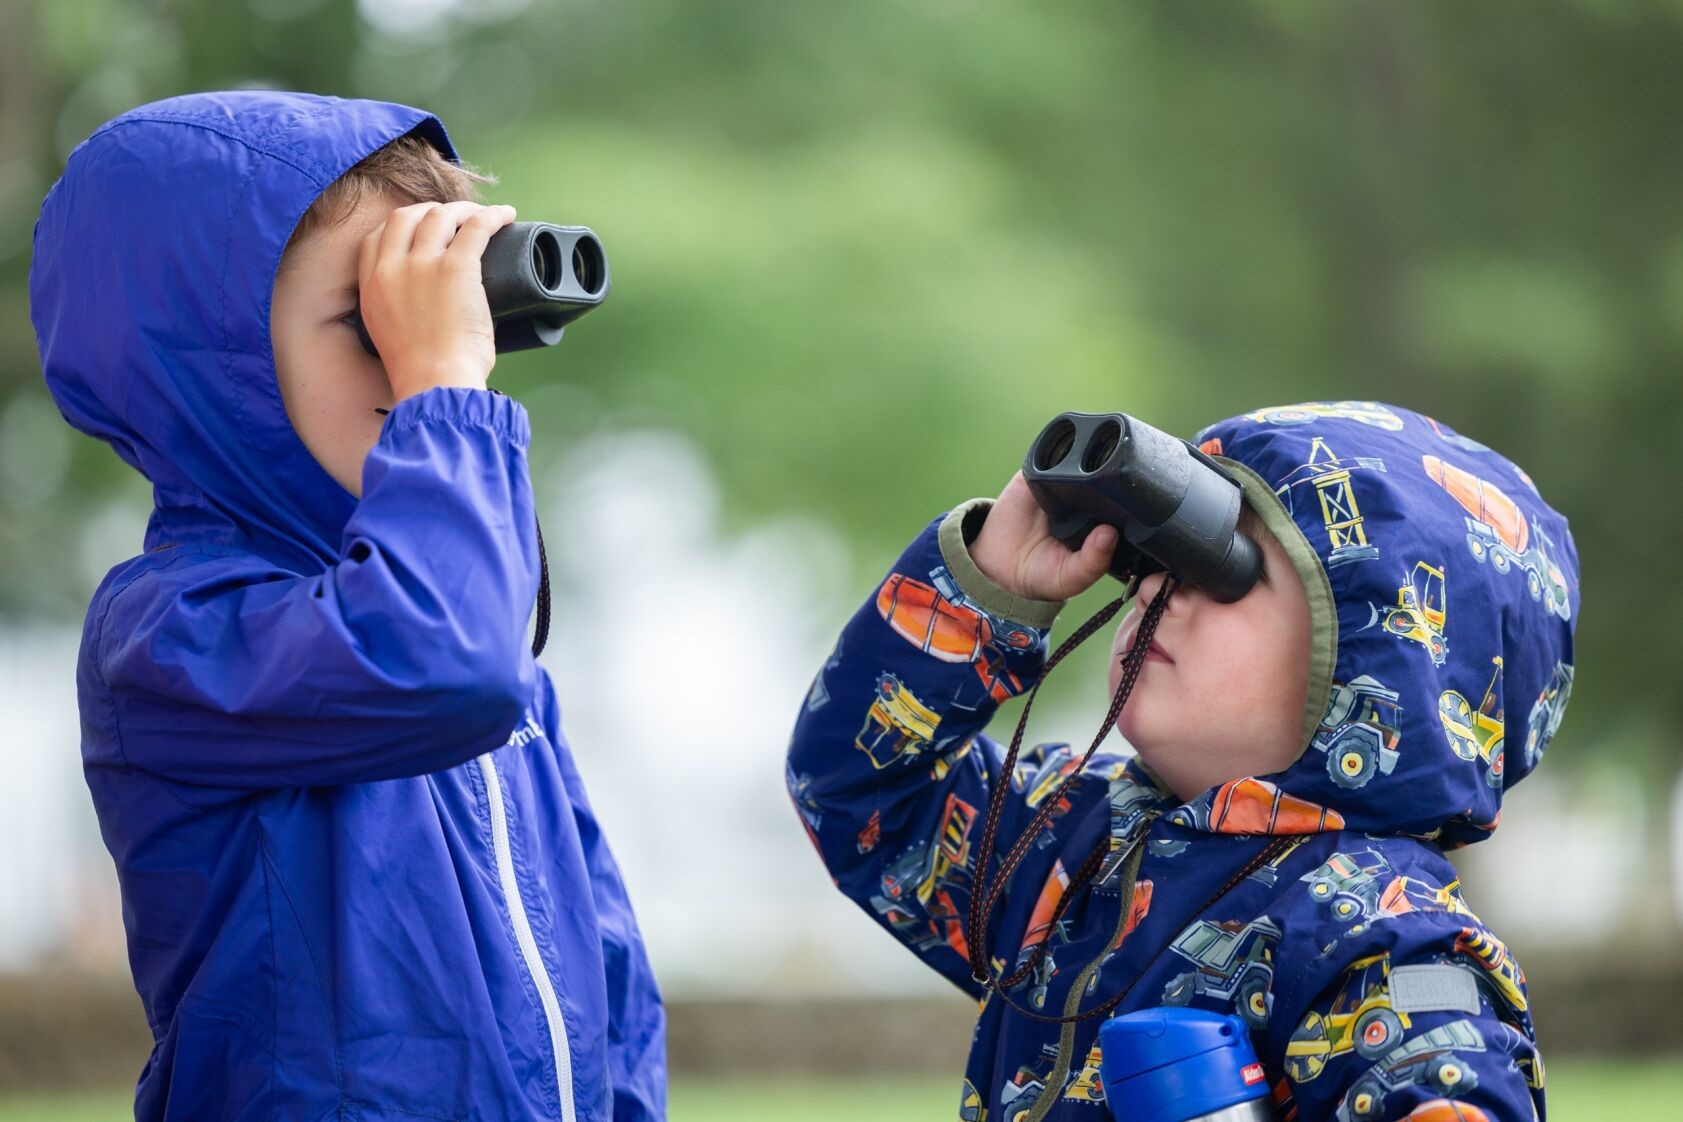 Two children peer through binoculars